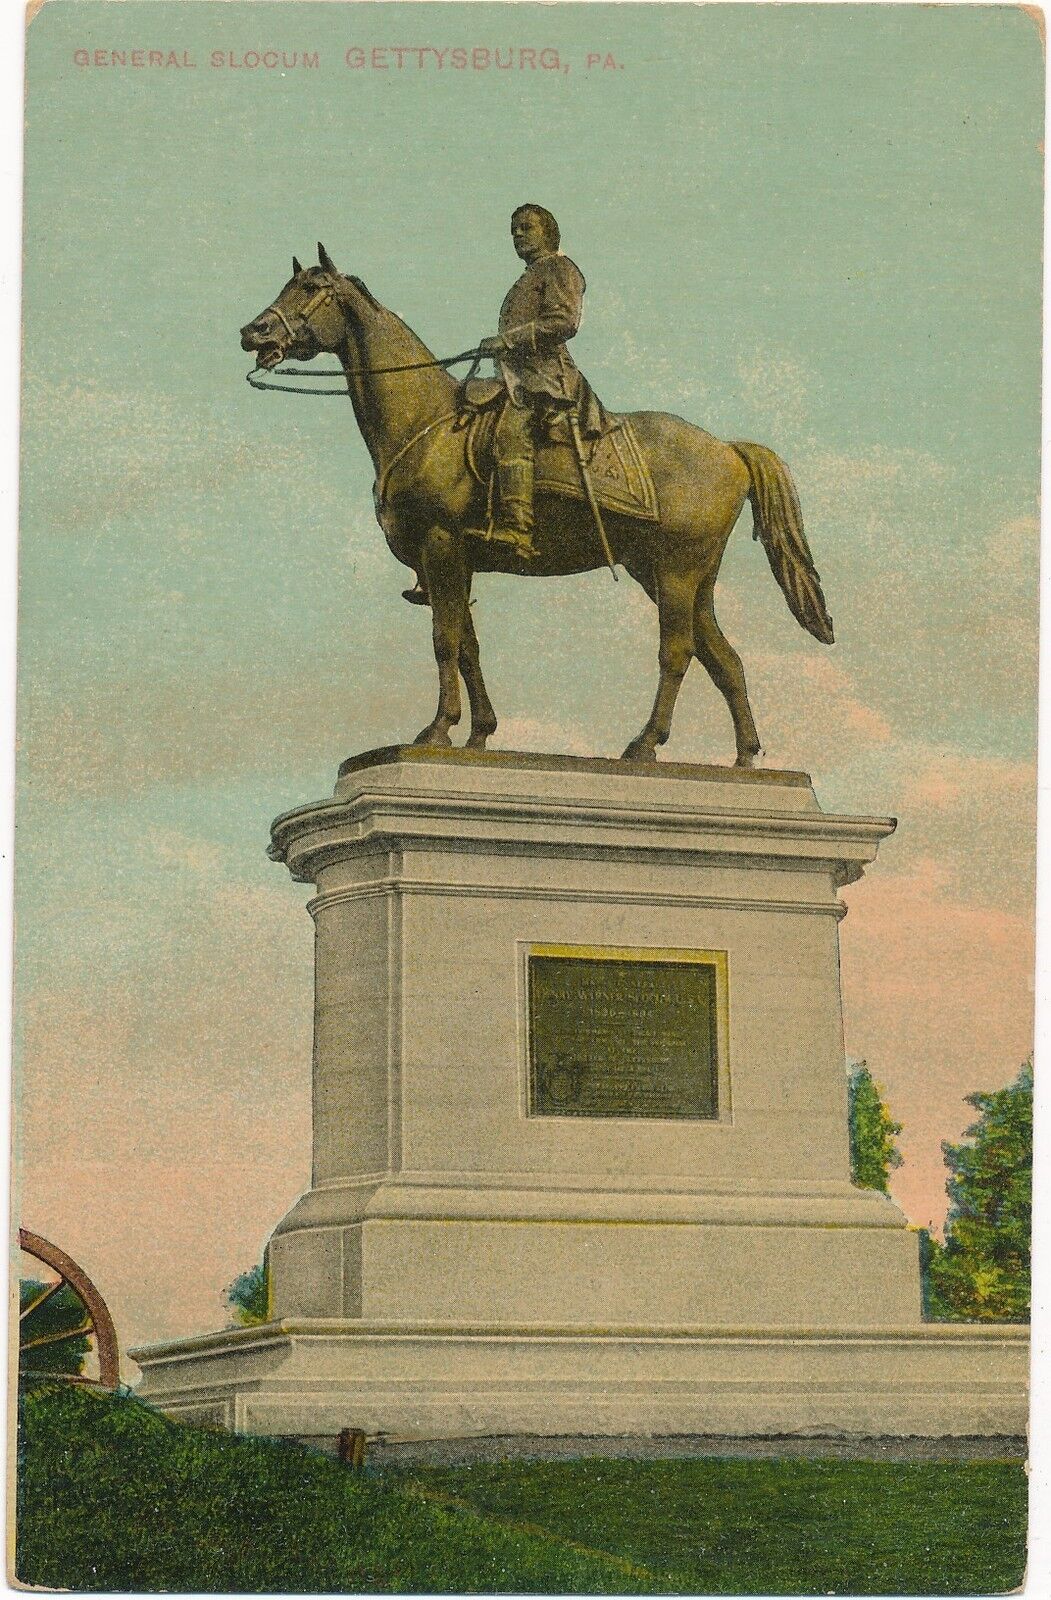 GETTYSBURG PA – General Slocum Monument